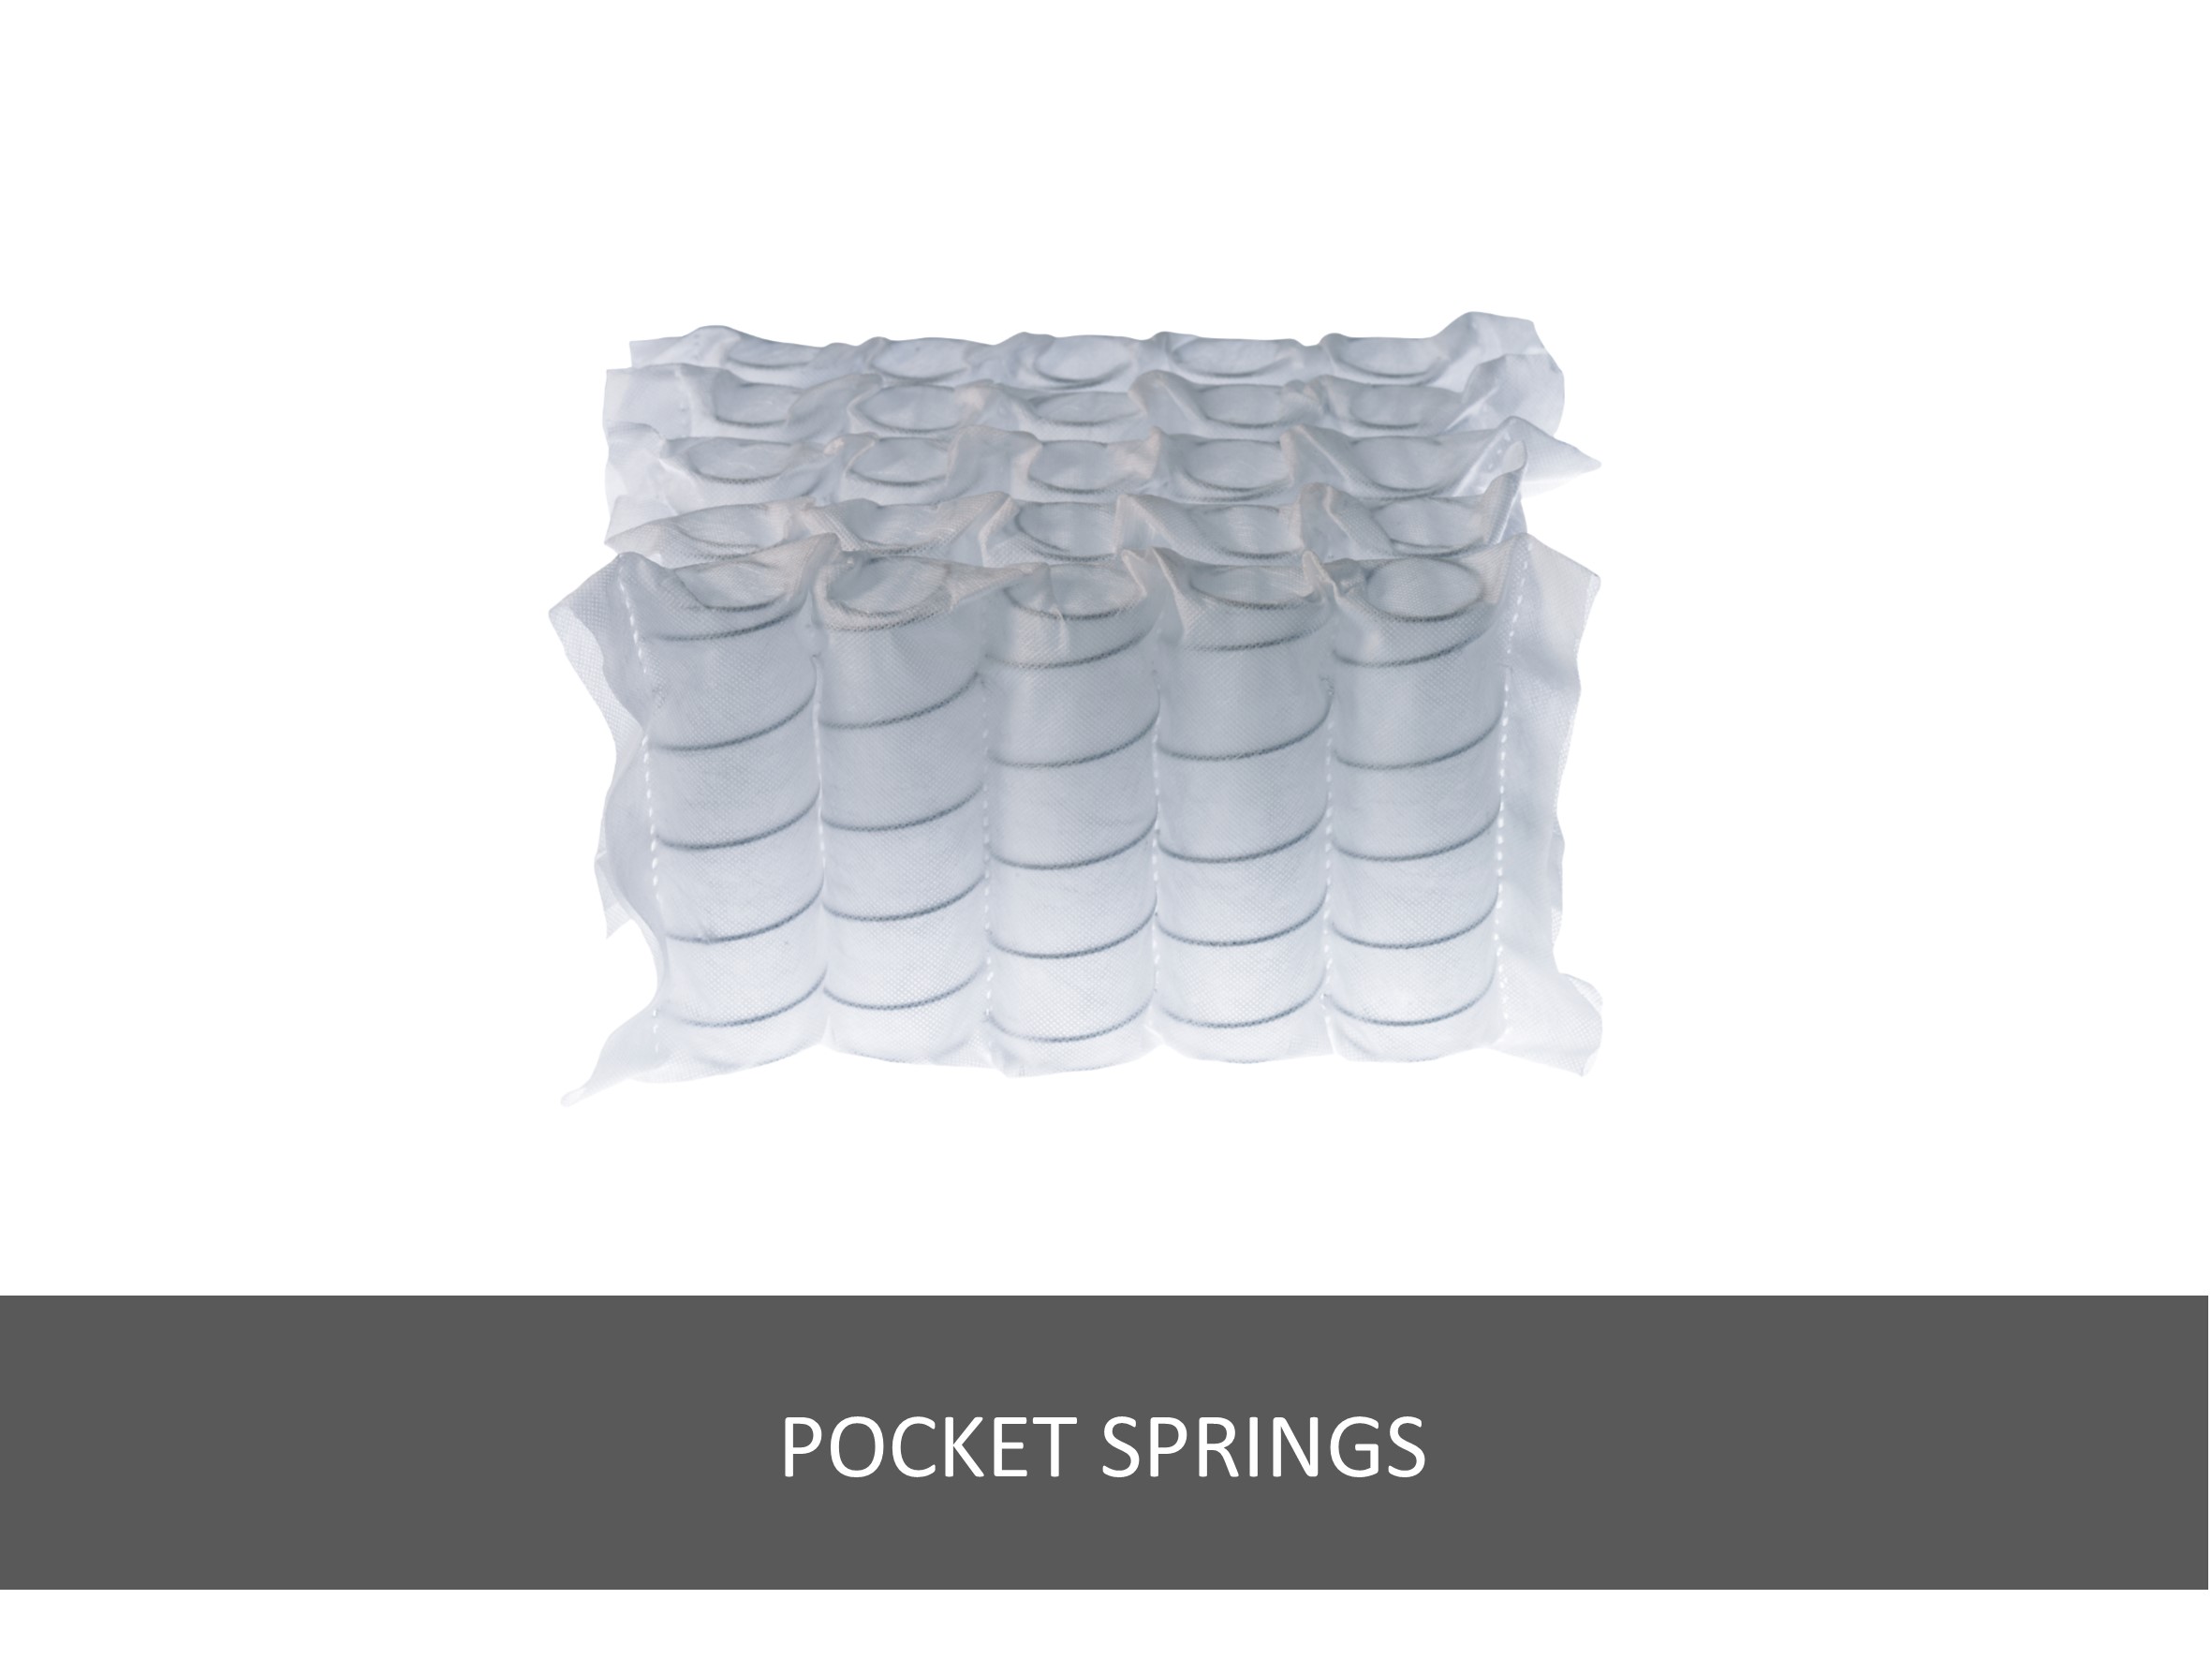 Pocket springs